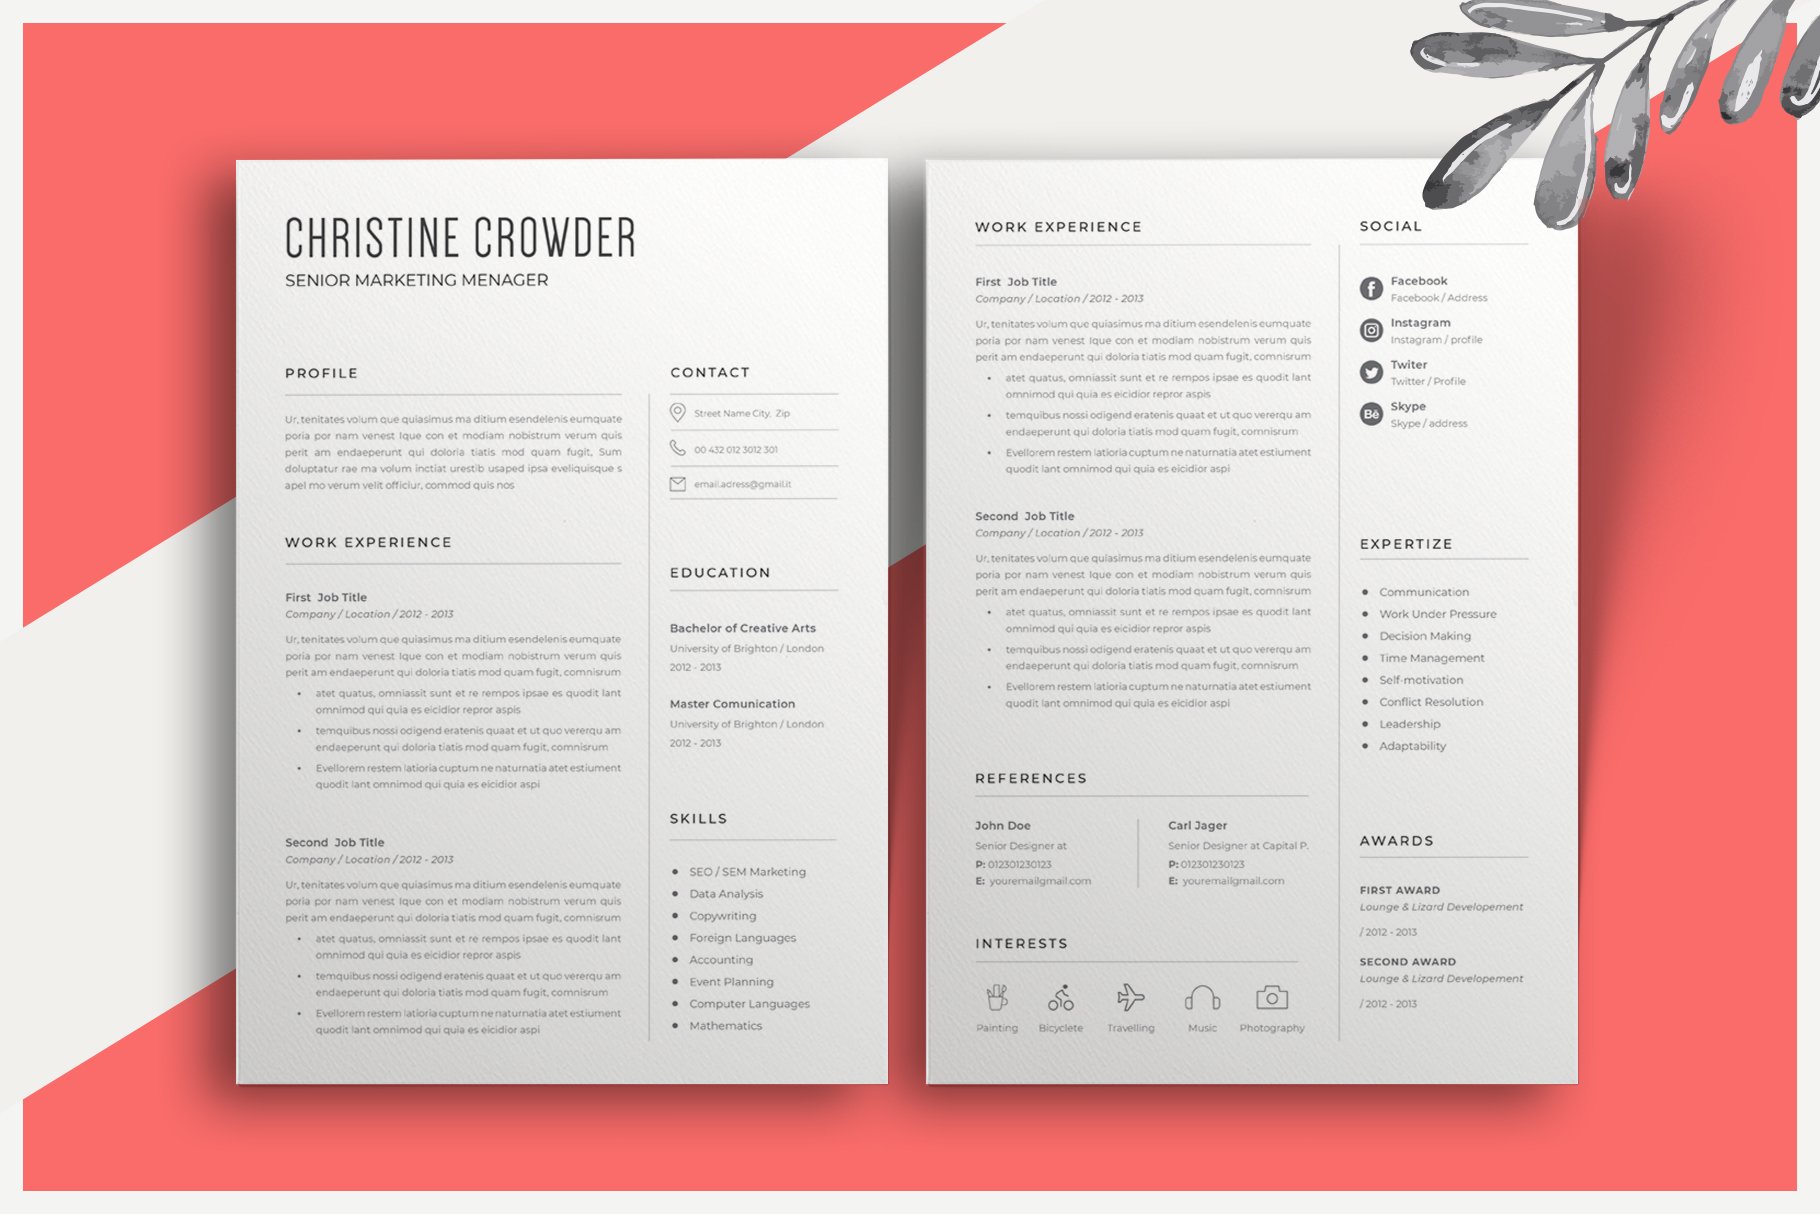 Minimalist Resume preview image.